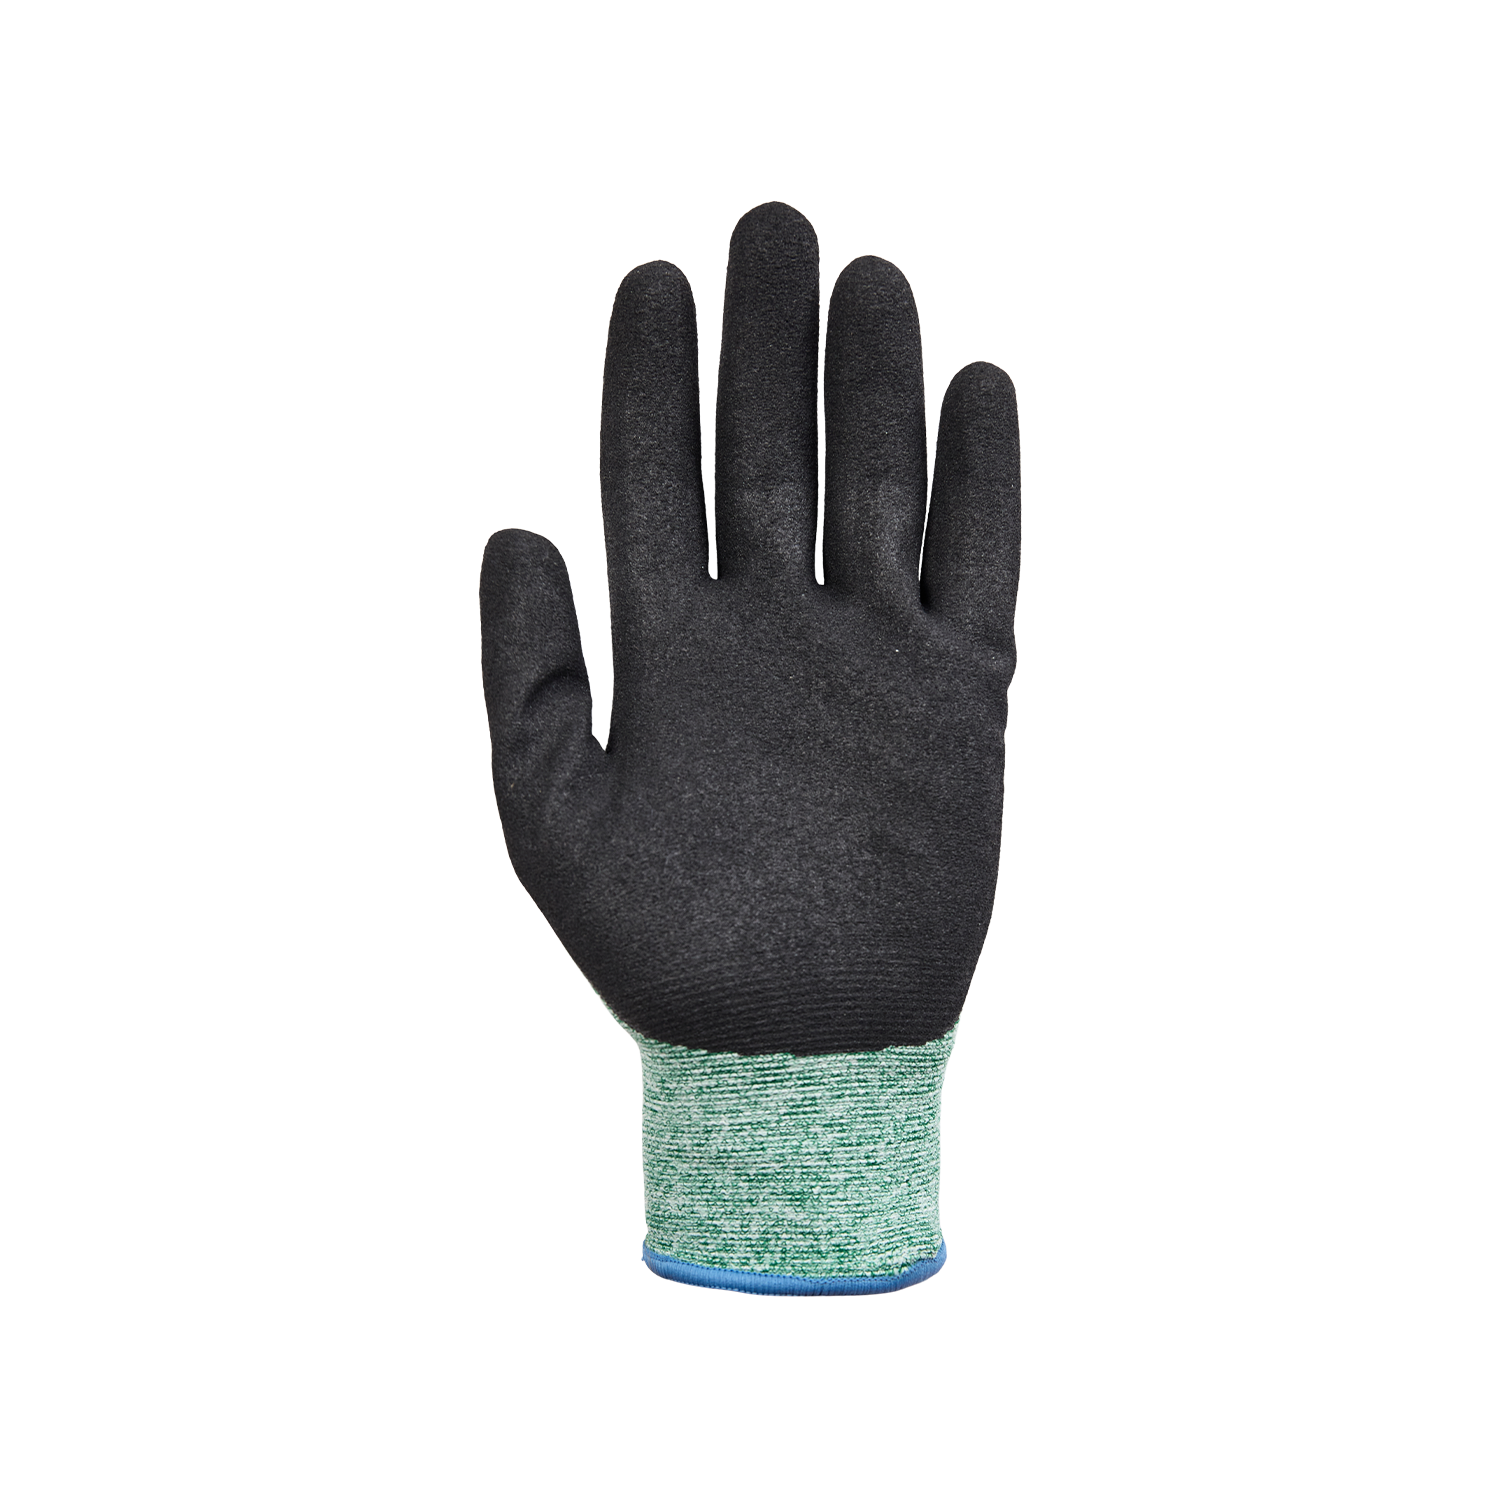 NORSE Eco Flex Original assembly gloves size 7